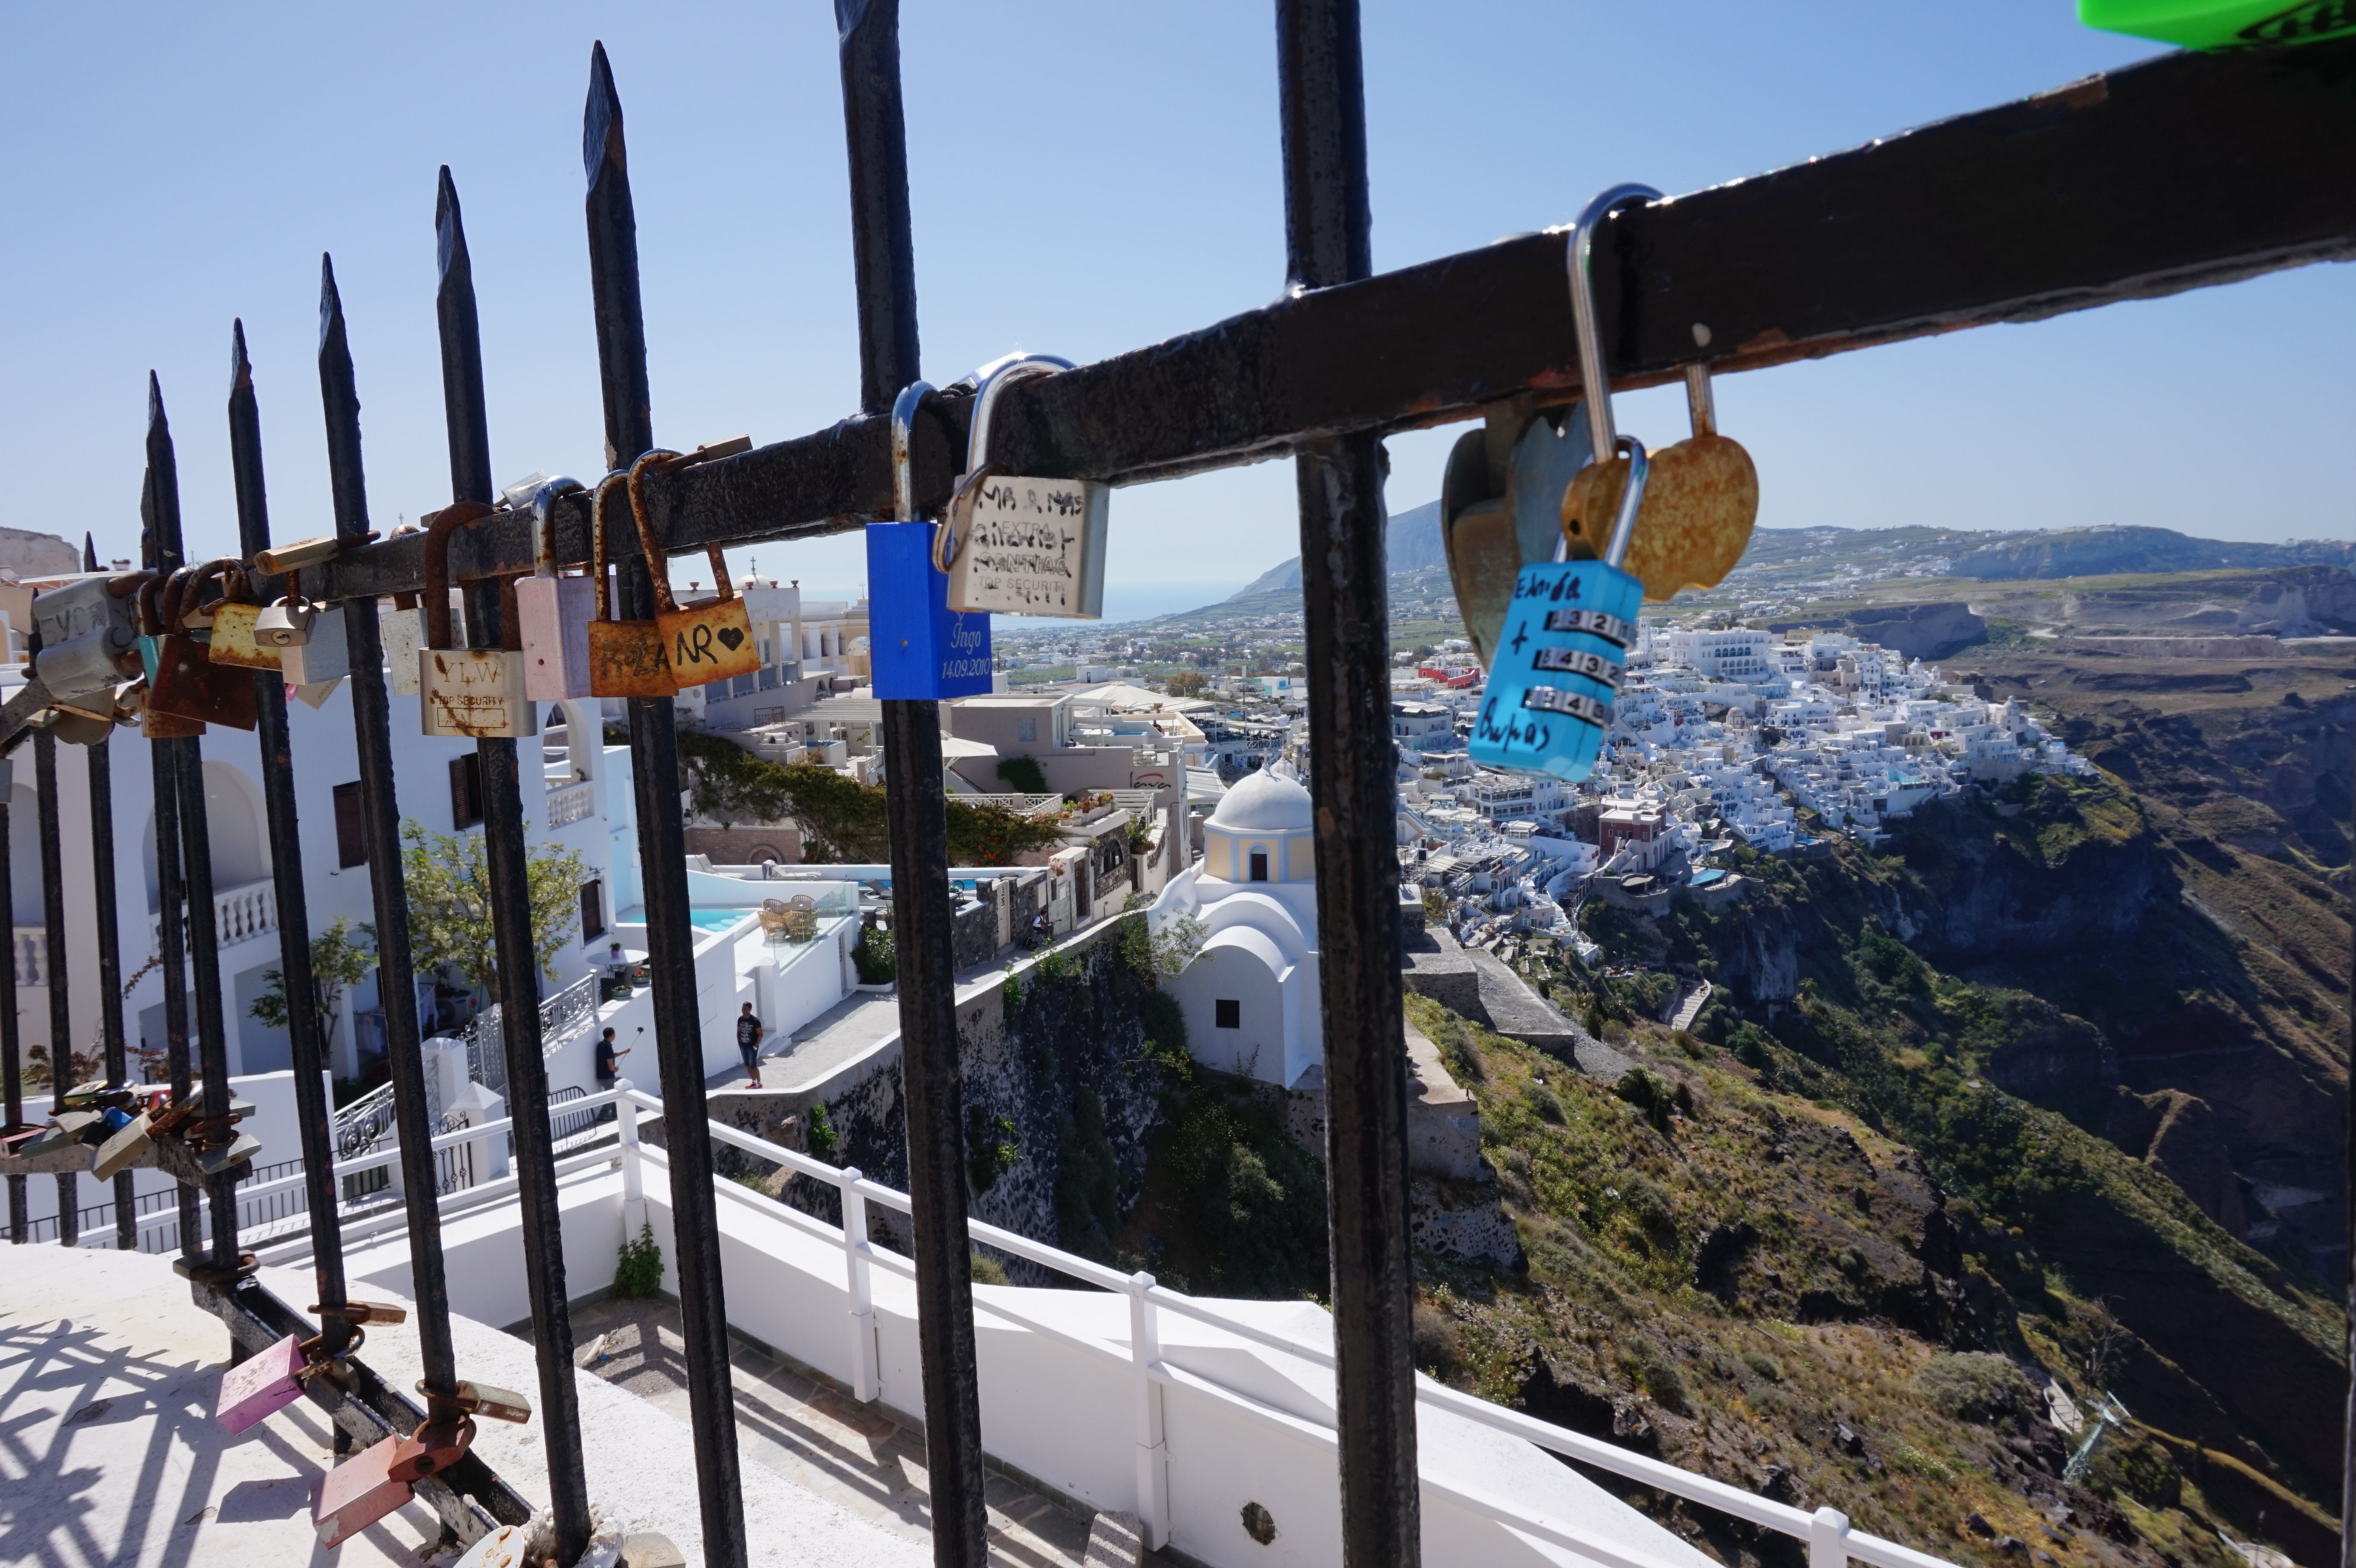 Padlocks on a fence in Santorini